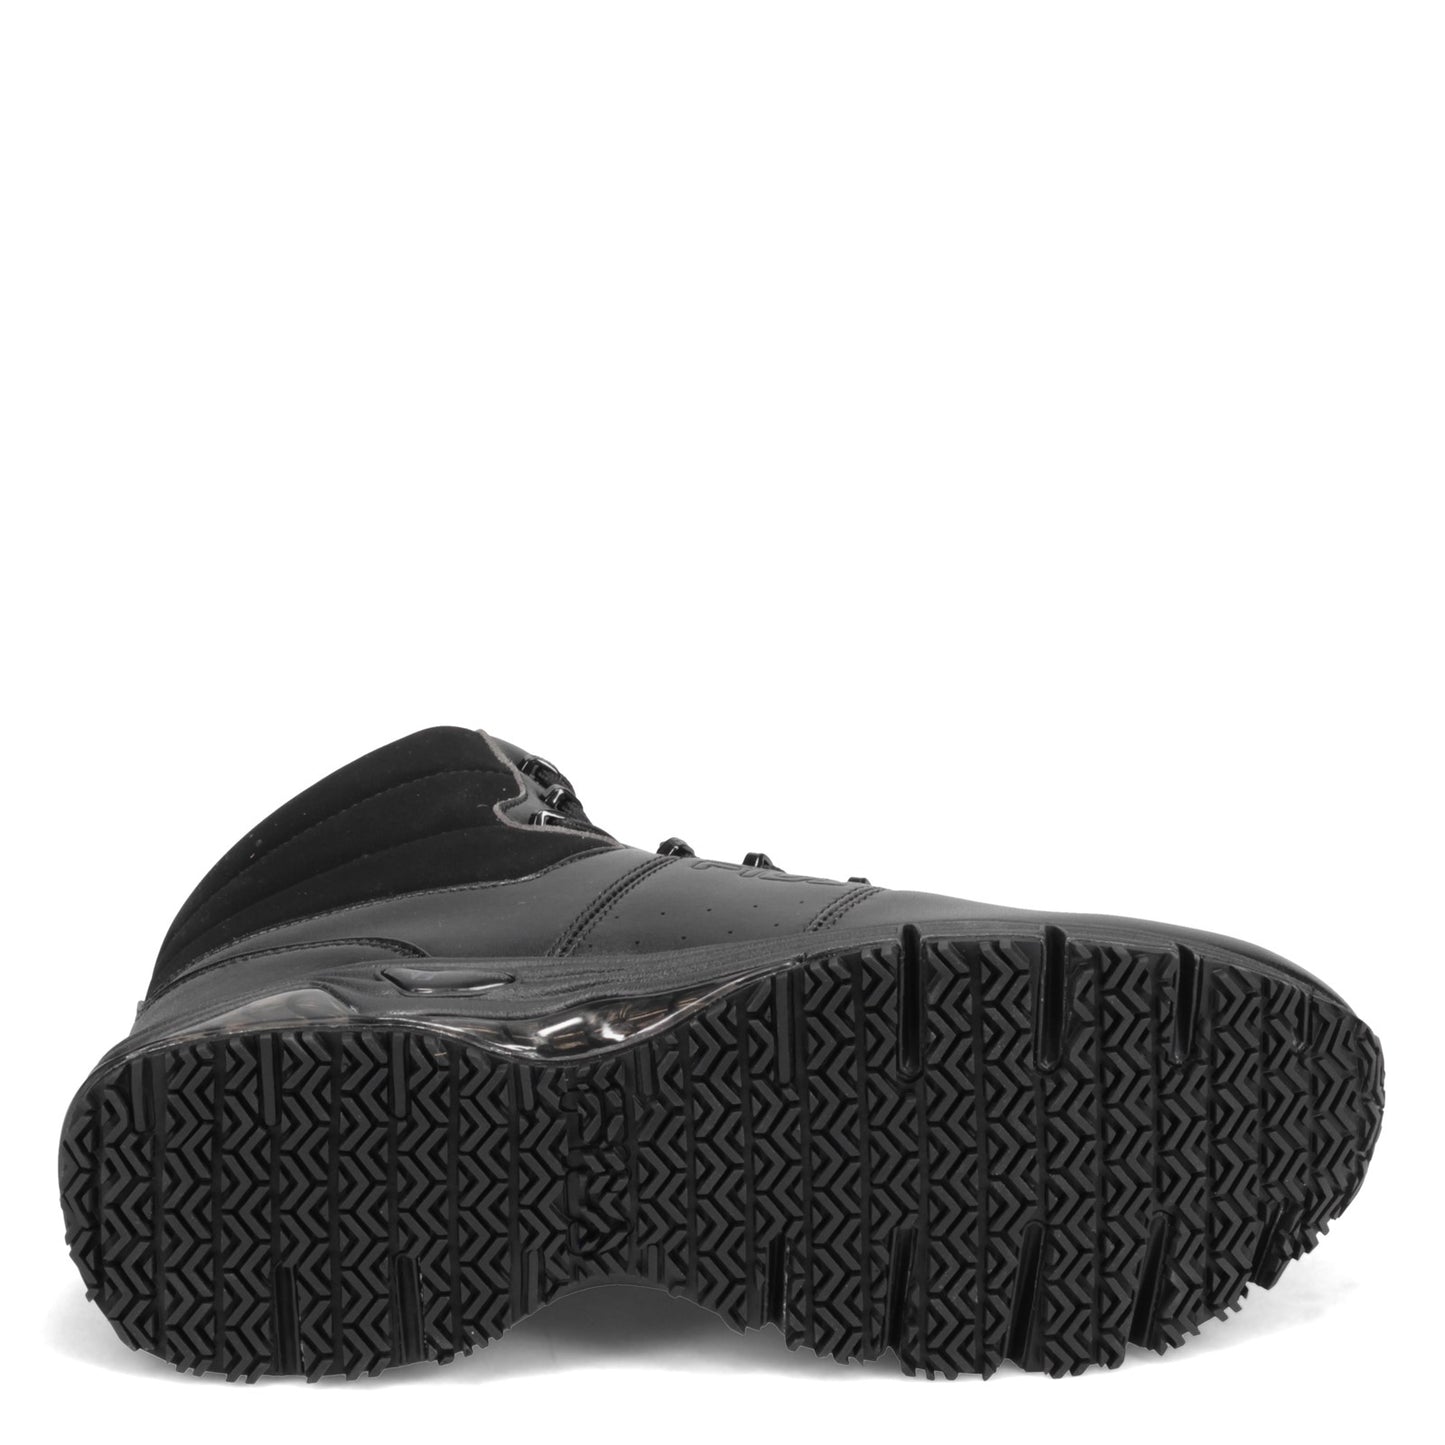 Peltz Shoes  Men's Fila Memory Breach SR Work Boot BLACK 1SH40132-001